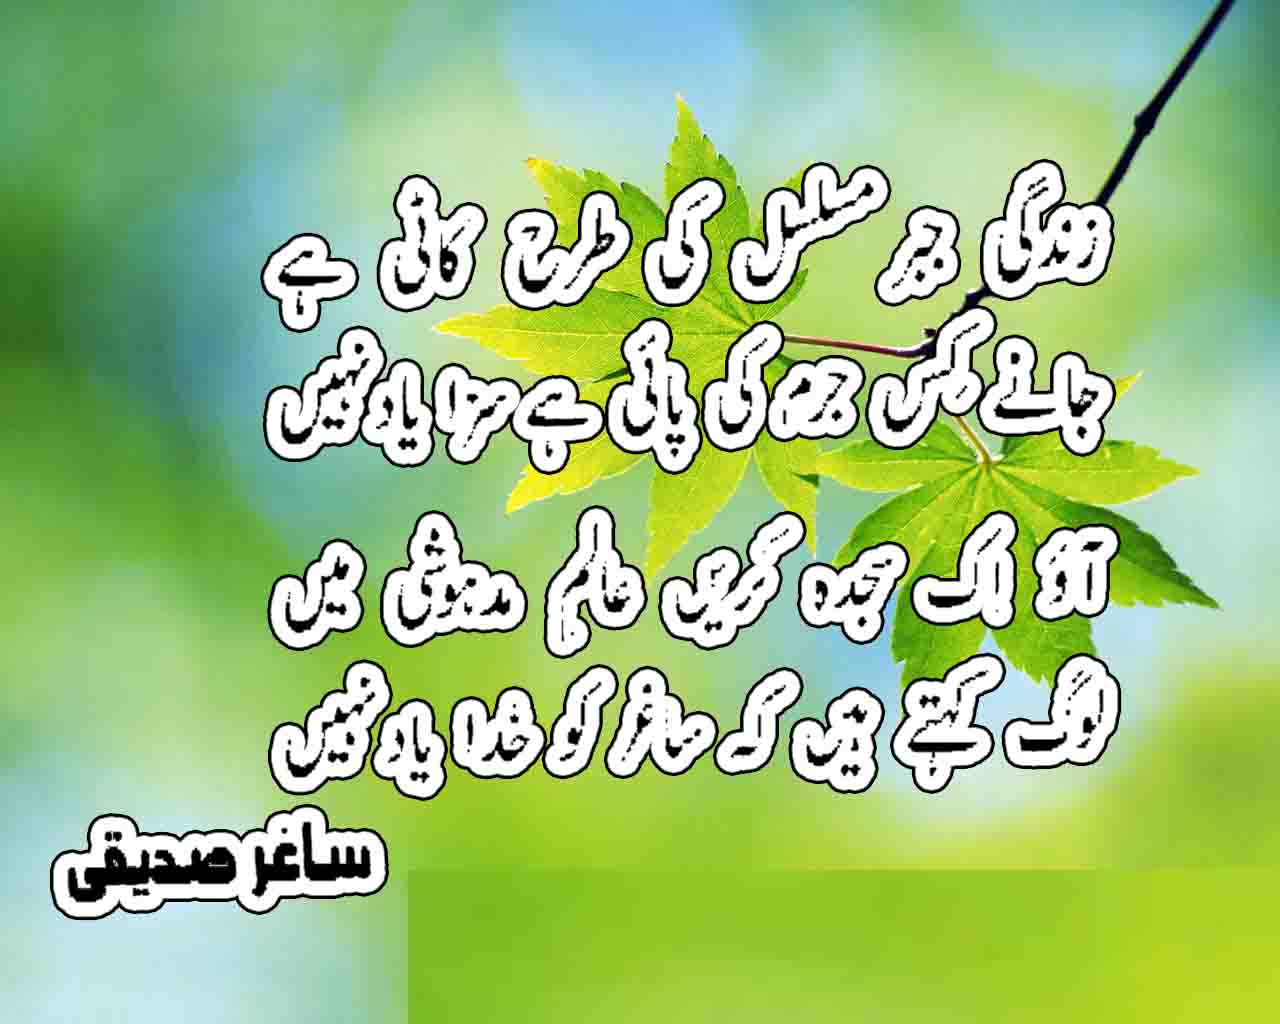 Saghir siddique Urdu poetry in designed pictures